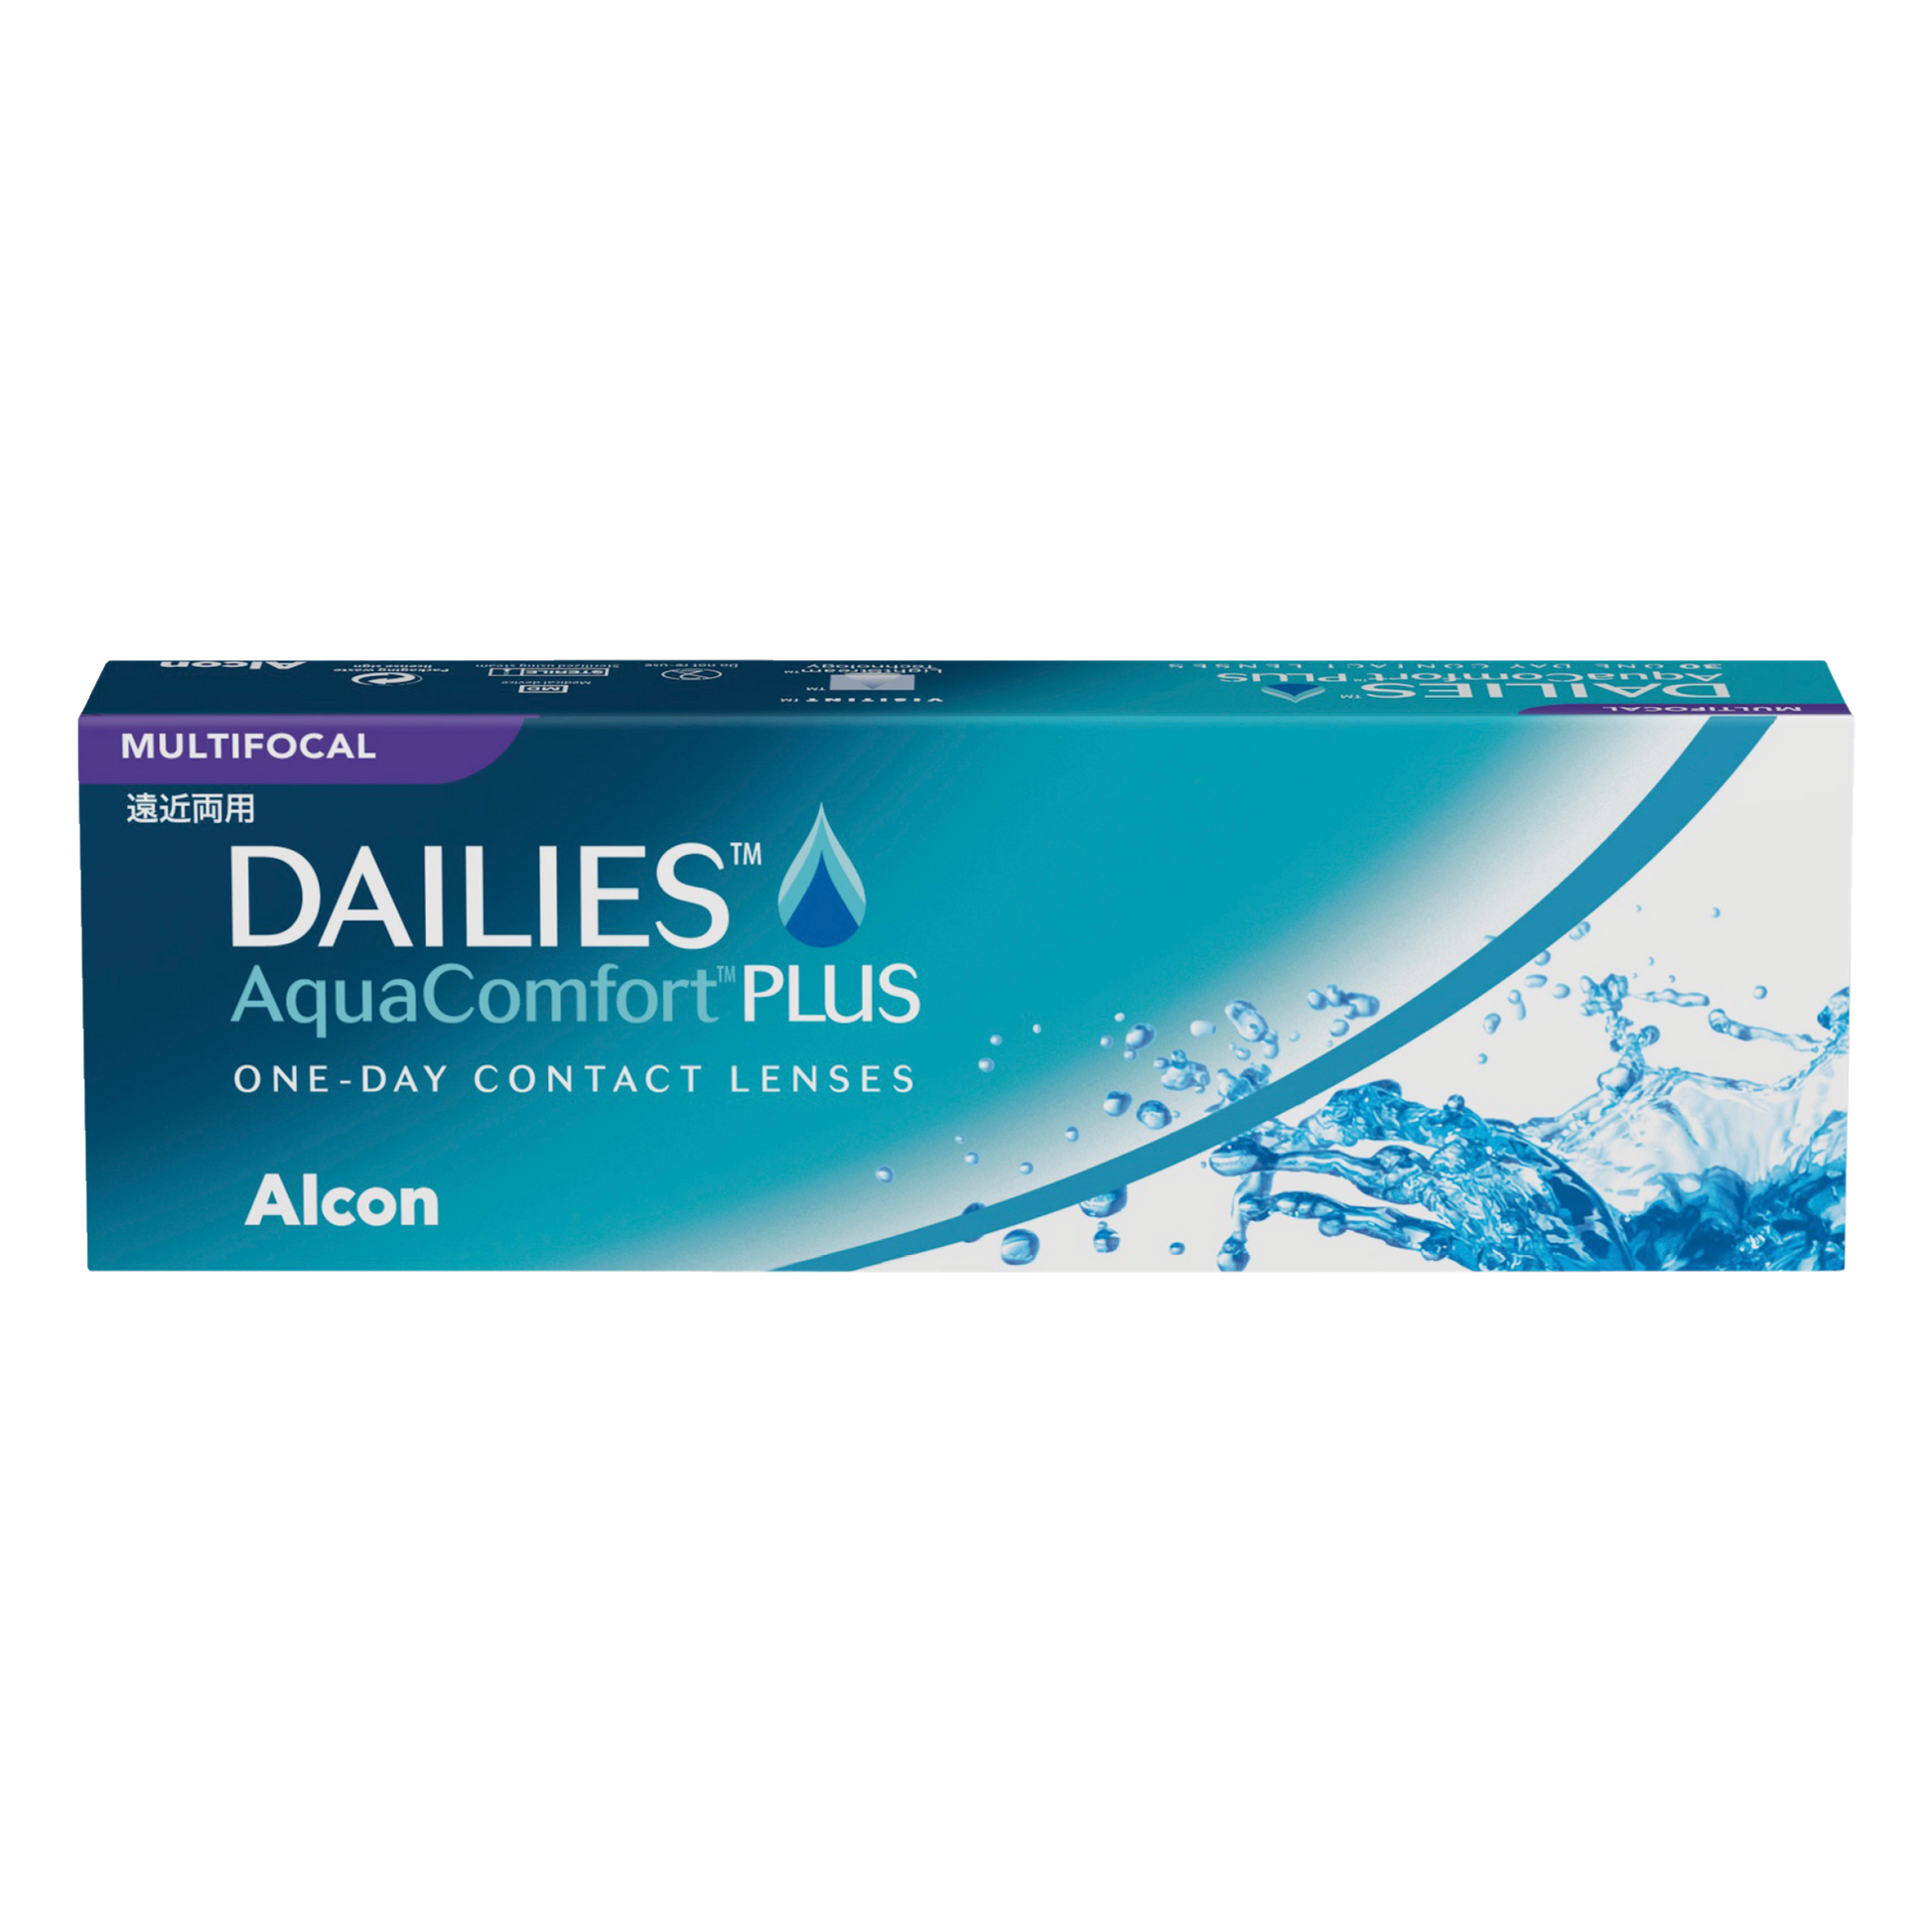 Box of Alcon Dailies AquaComfort Plus contact lenses